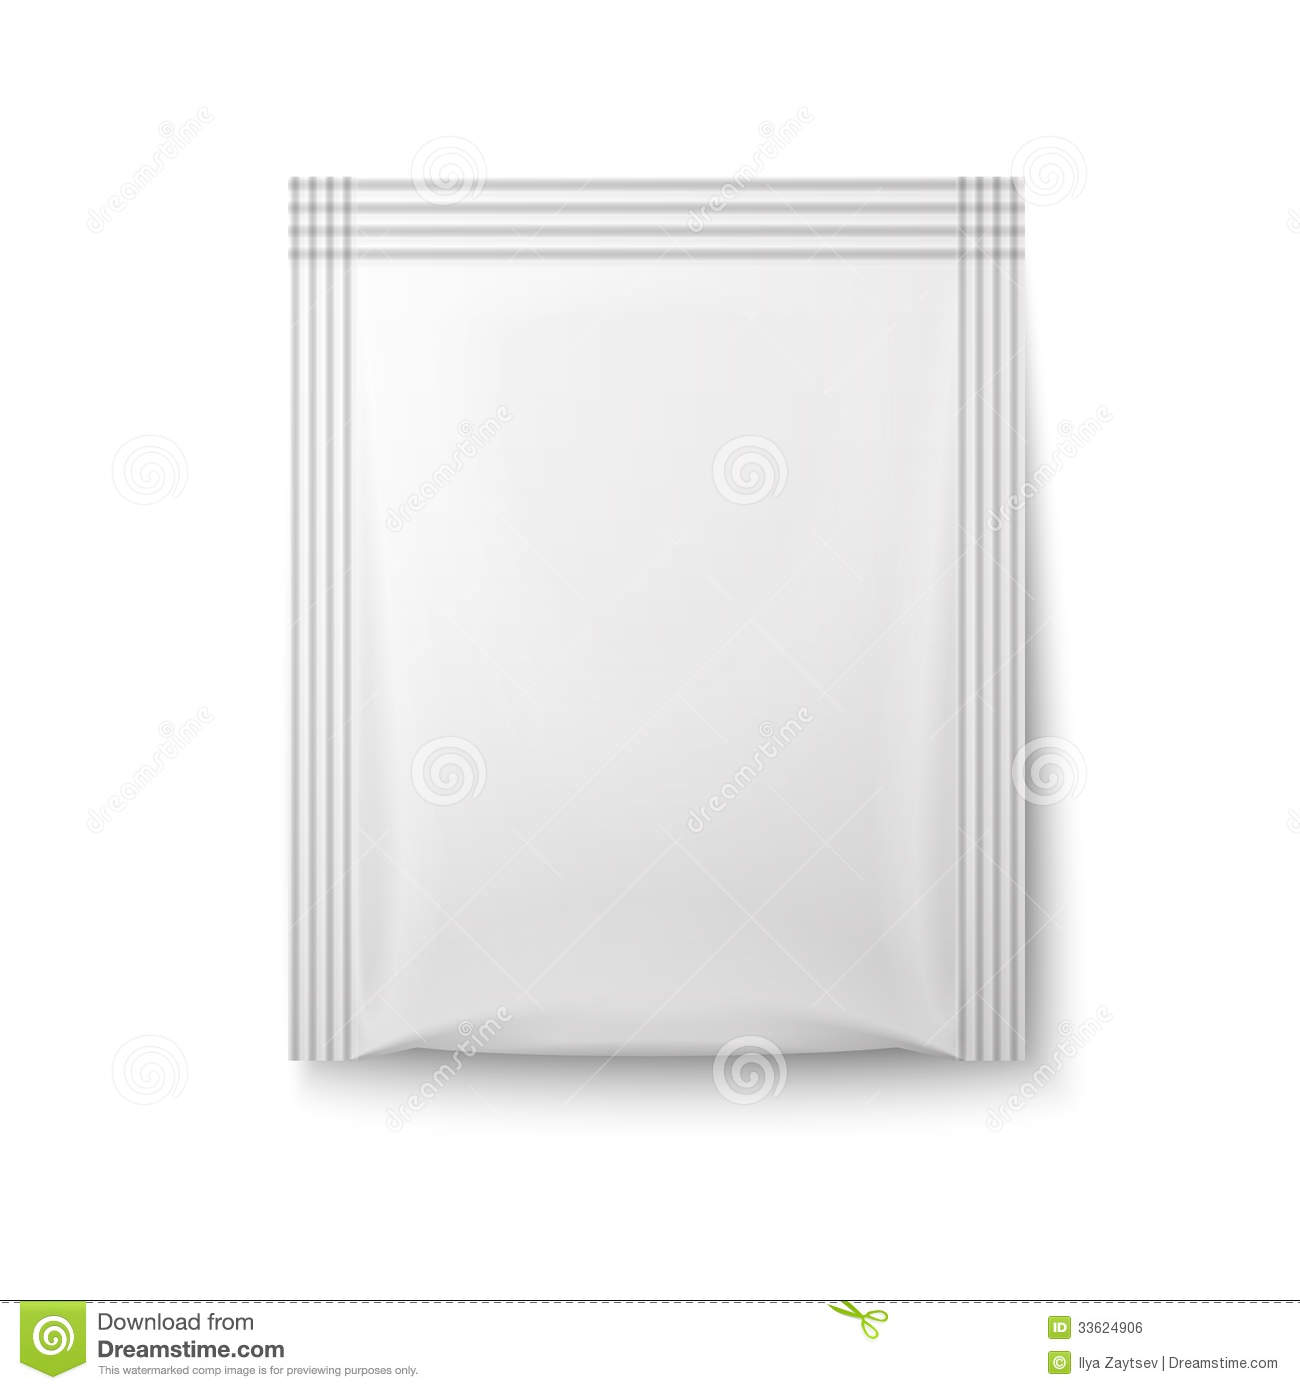 Bag Of Sugar Clipart White Paper Sachet Bag